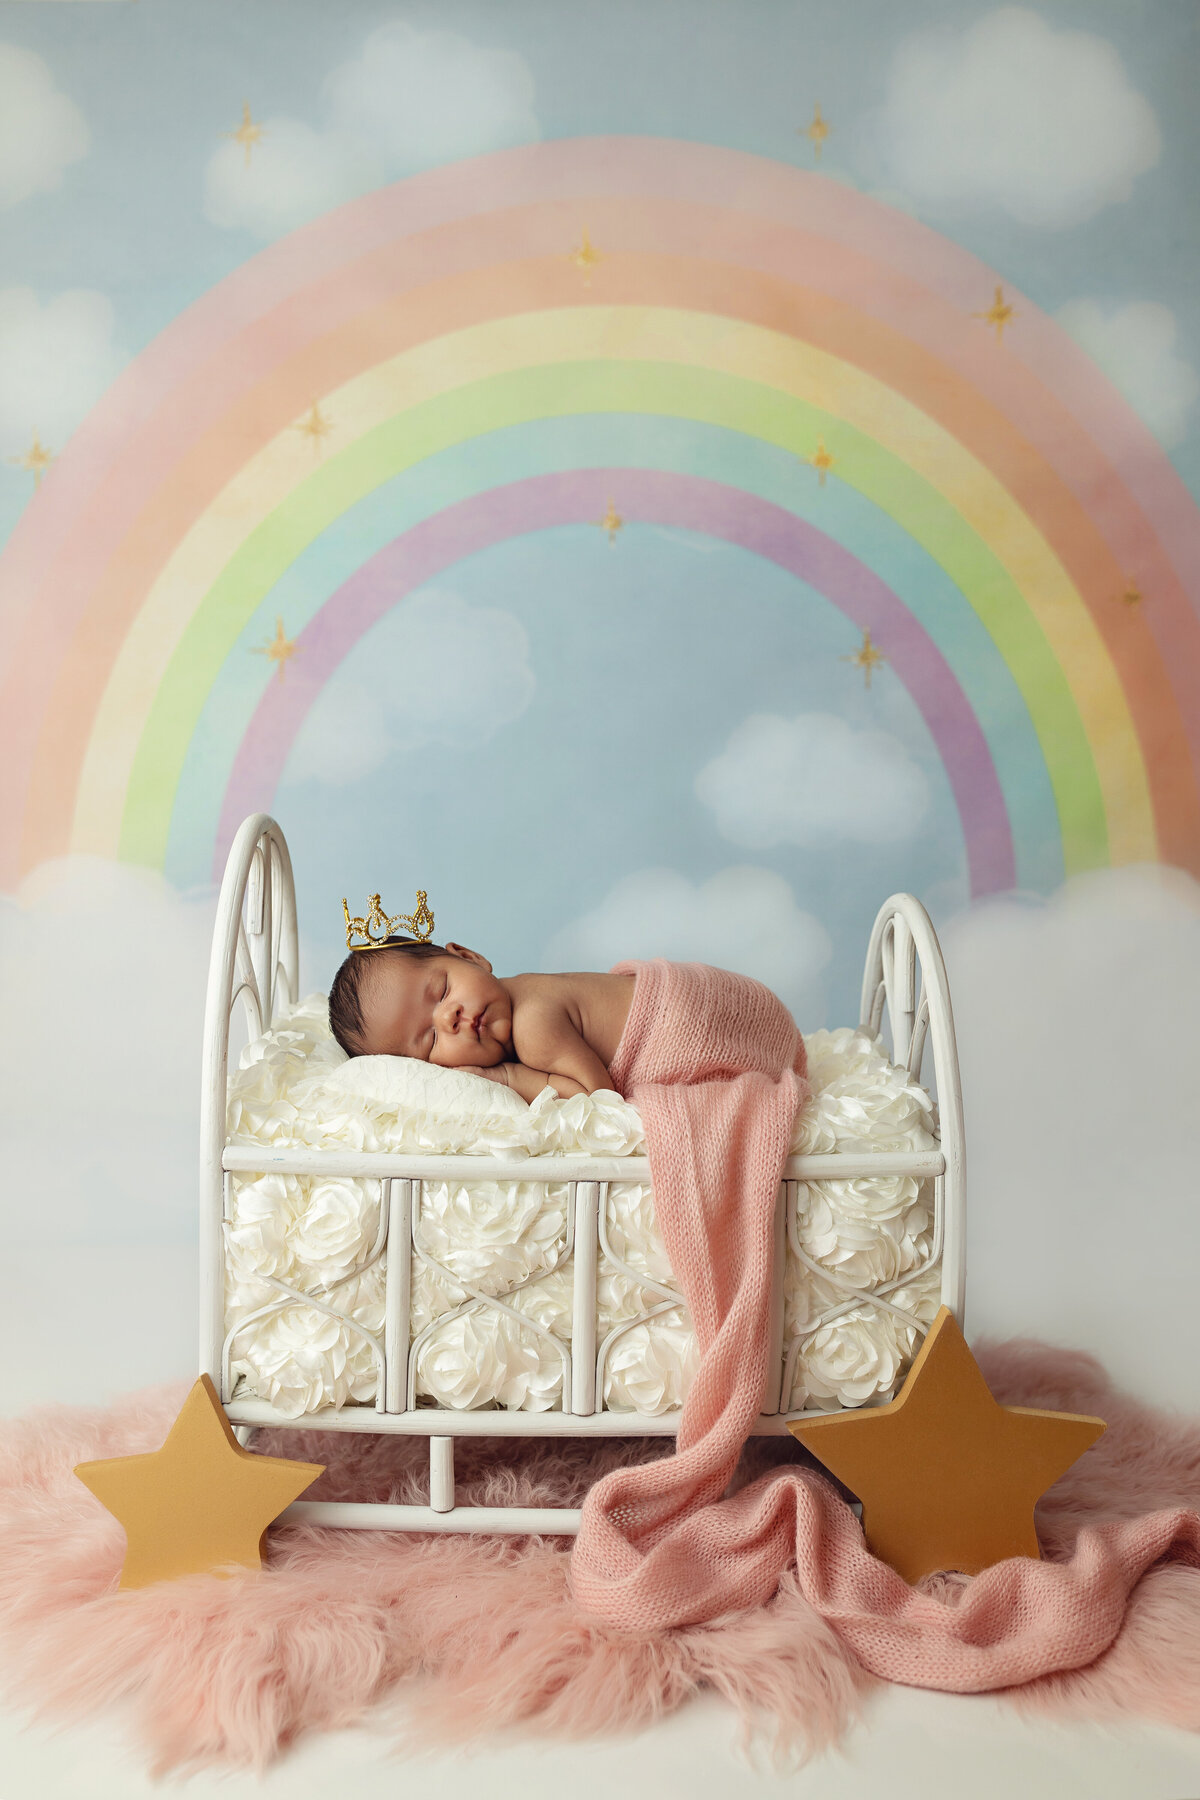 A newborn baby sleeps in a metal bed in a studio under a rainbow